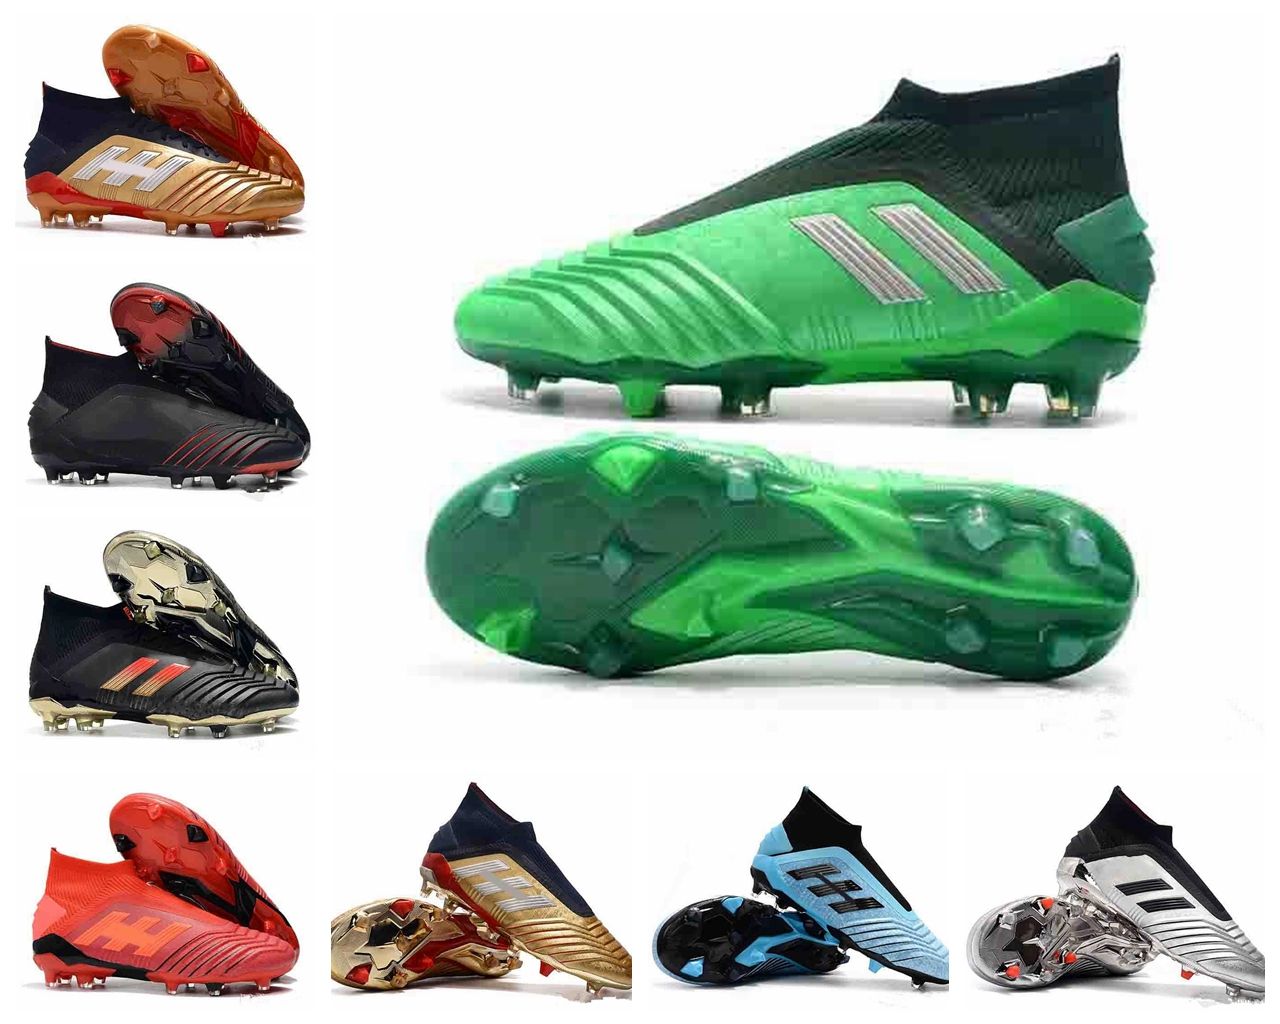 ADIDAS 2019 llegado Zapatos de fútbol para hombre Predator 19.1 FG Botines de tobillo alto